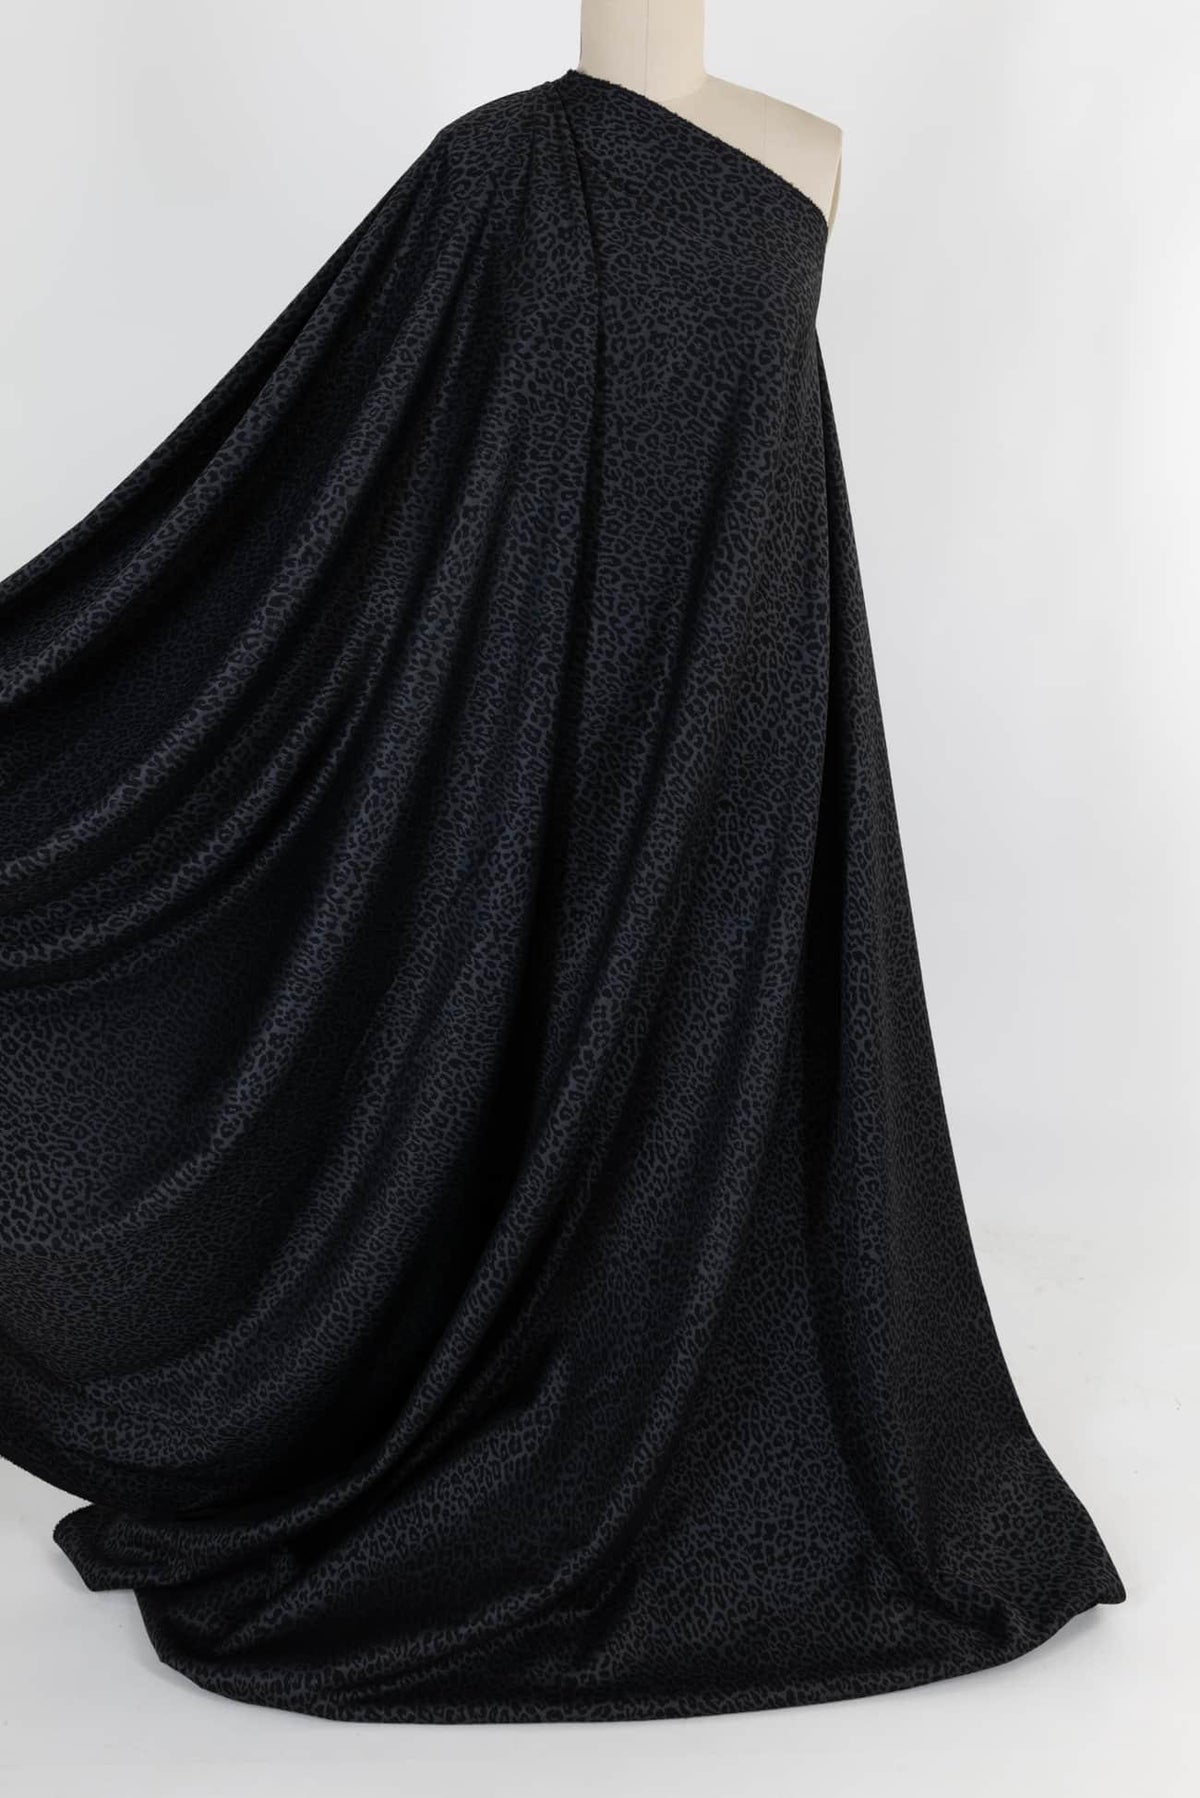 Gray Dragonwell Ponte Knit - Marcy Tilton Fabrics